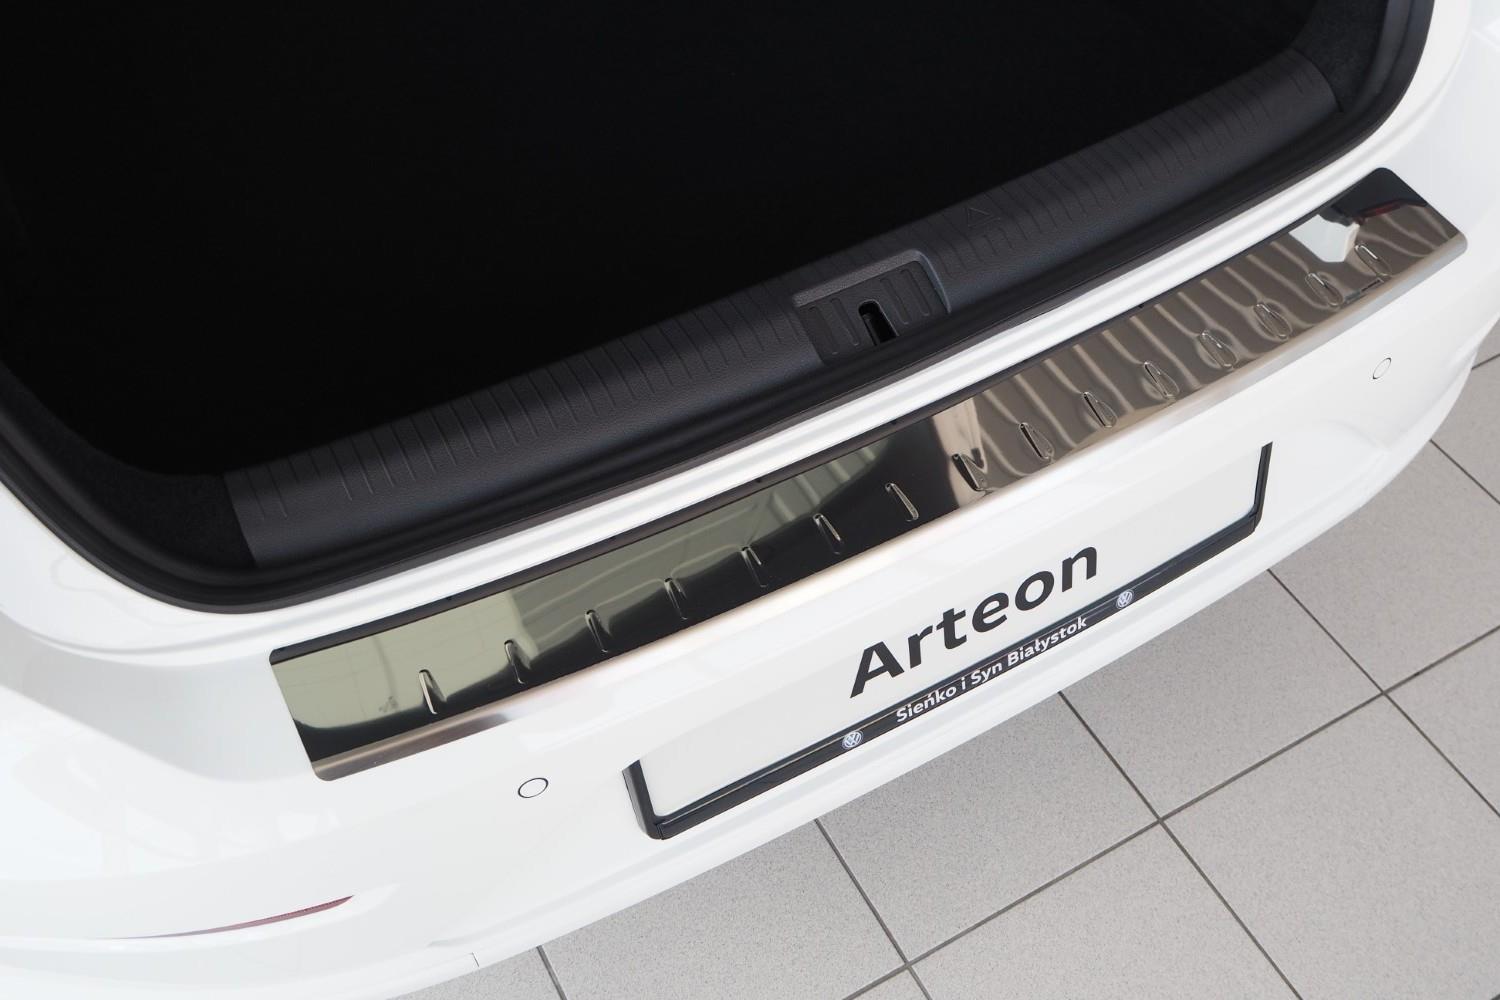 Protection de seuil de coffre Volkswagen Arteon 2017-présent 5 portes bicorps acier inox brillant